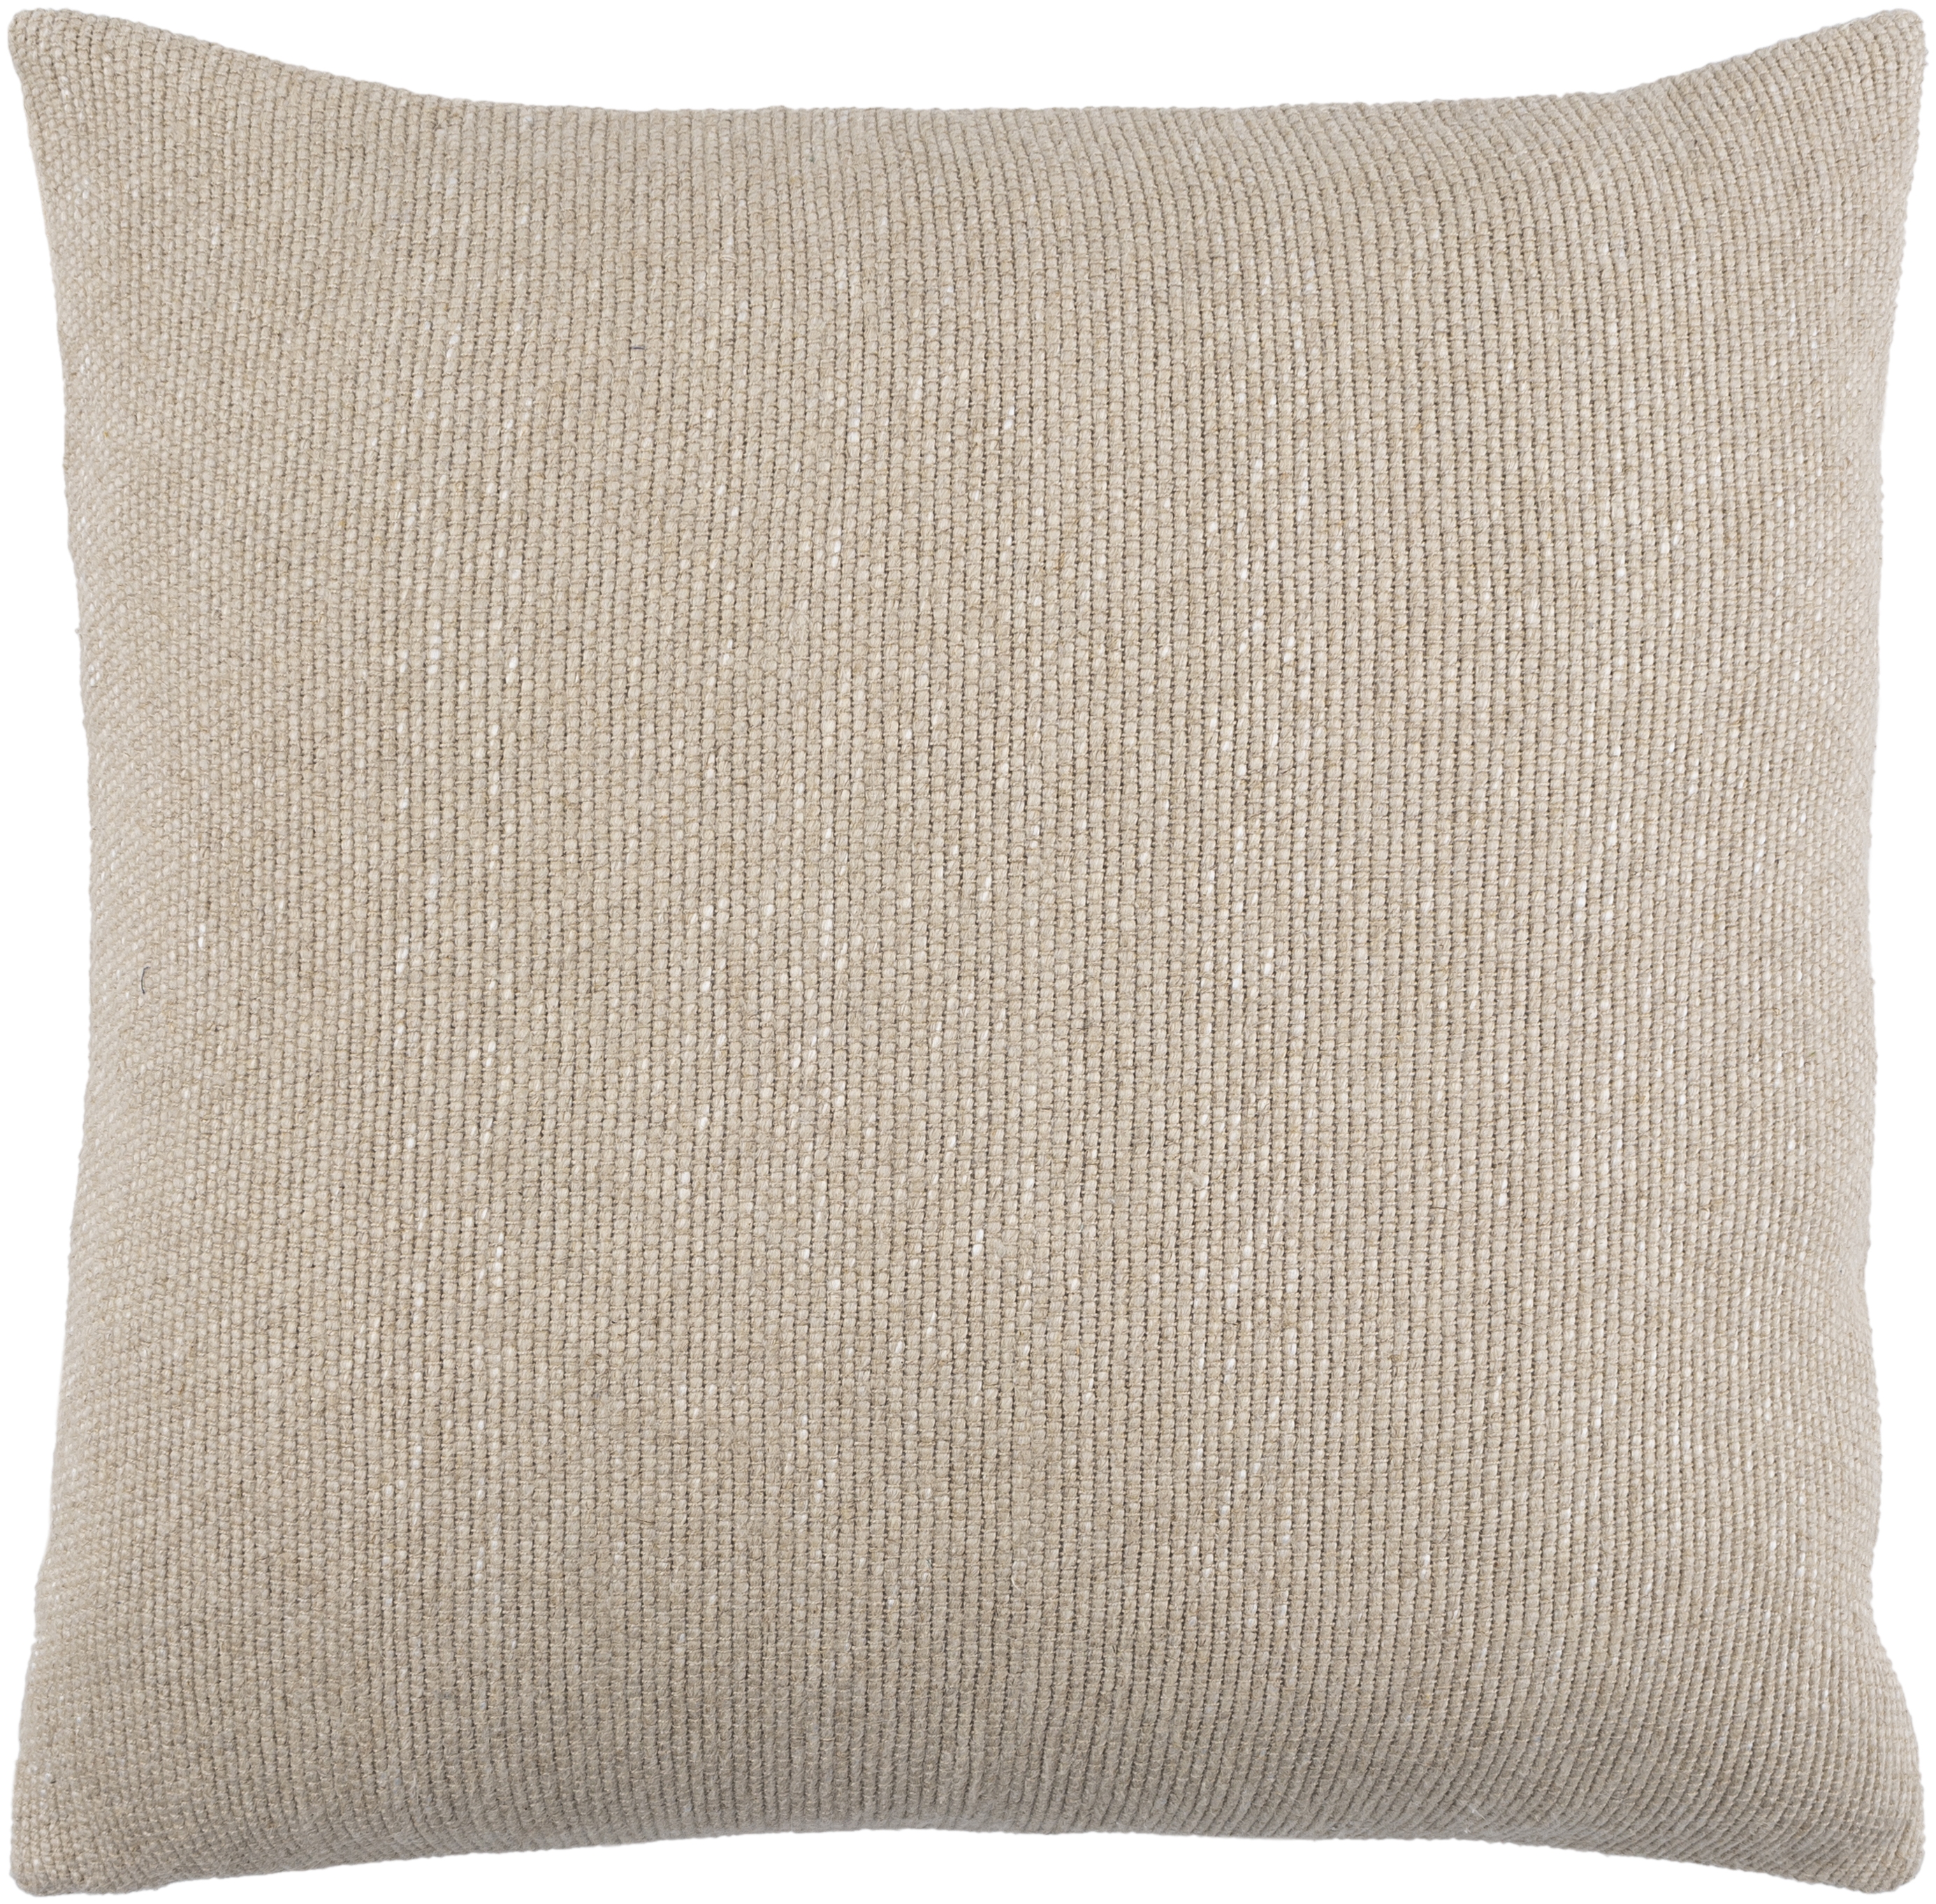 Willa Throw Pillow, Medium, with down insert - Image 0